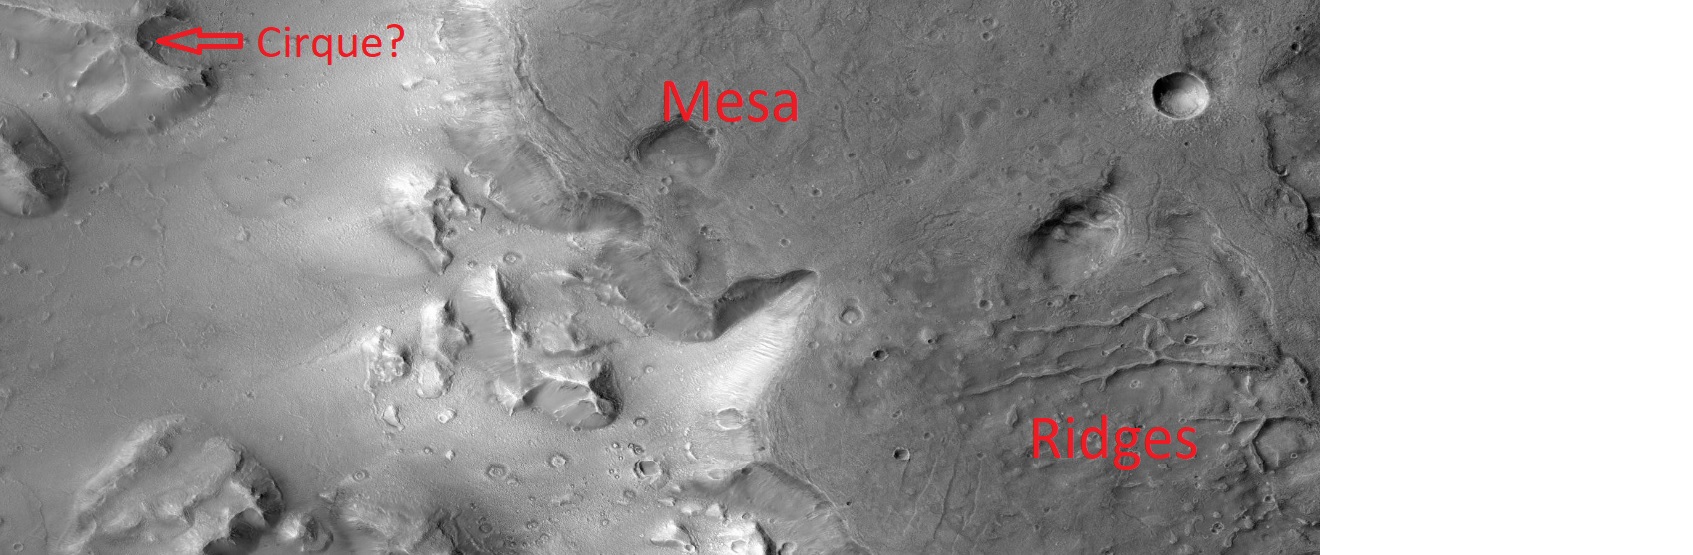 Mesa, ridges, possible cirques near Face